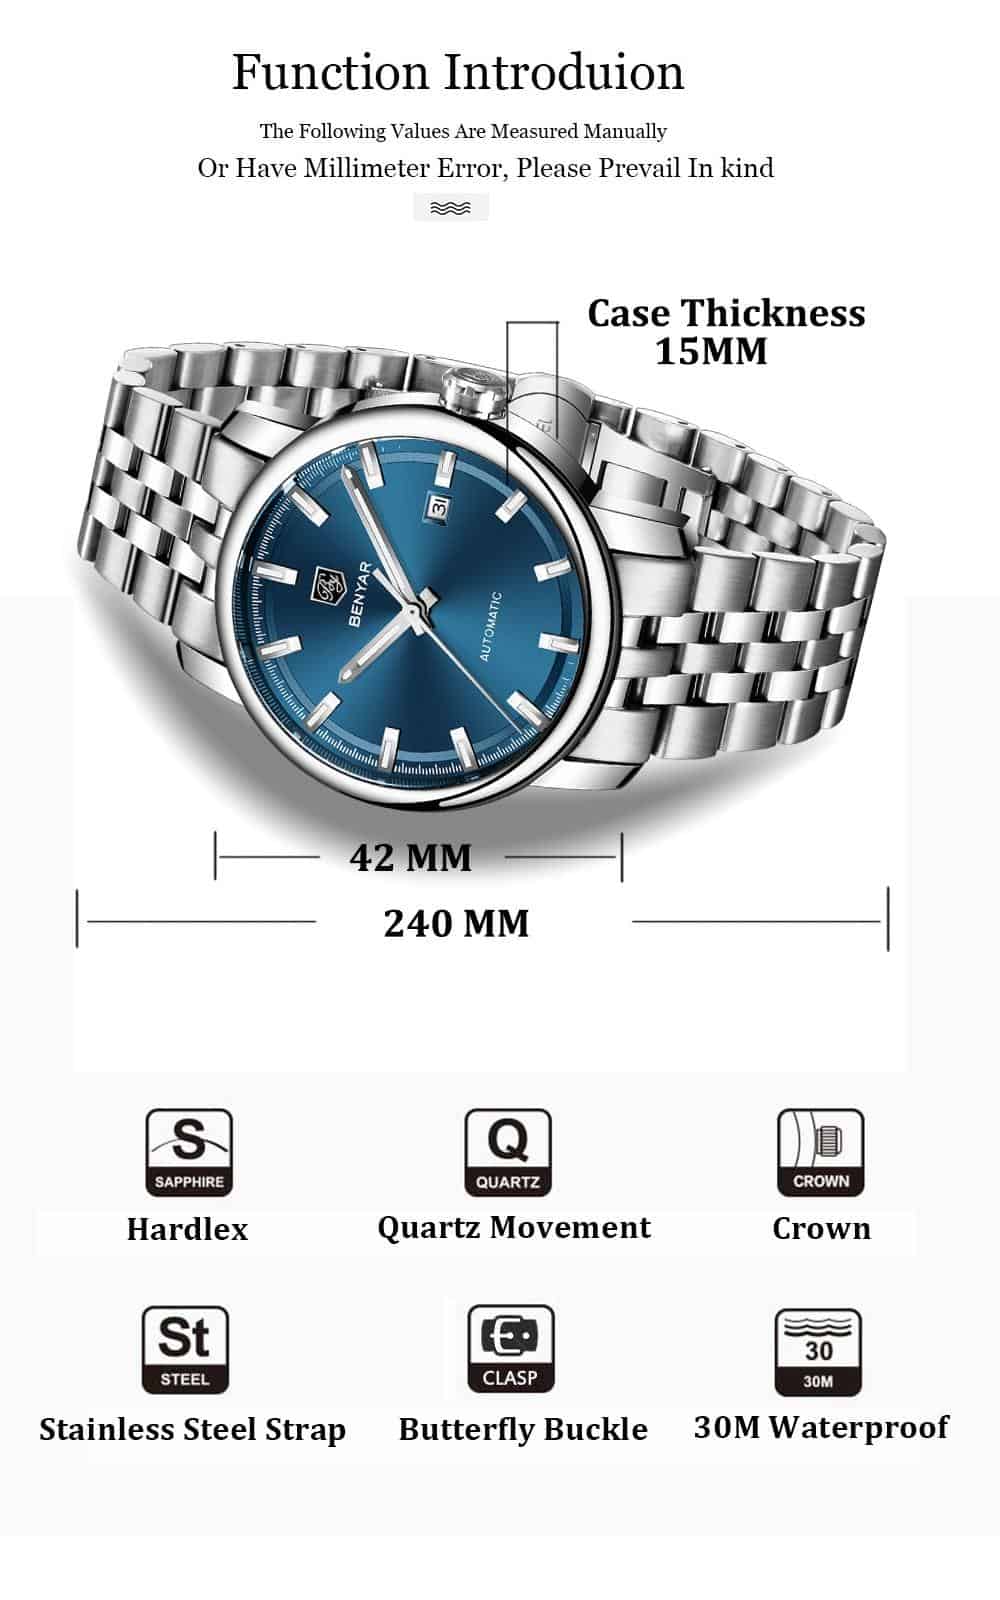 New BENYAR Men's Mechanical Watches Automatic Mens watches Top Brand Luxury watch men WristWatch Military Relogio Masculino 2019